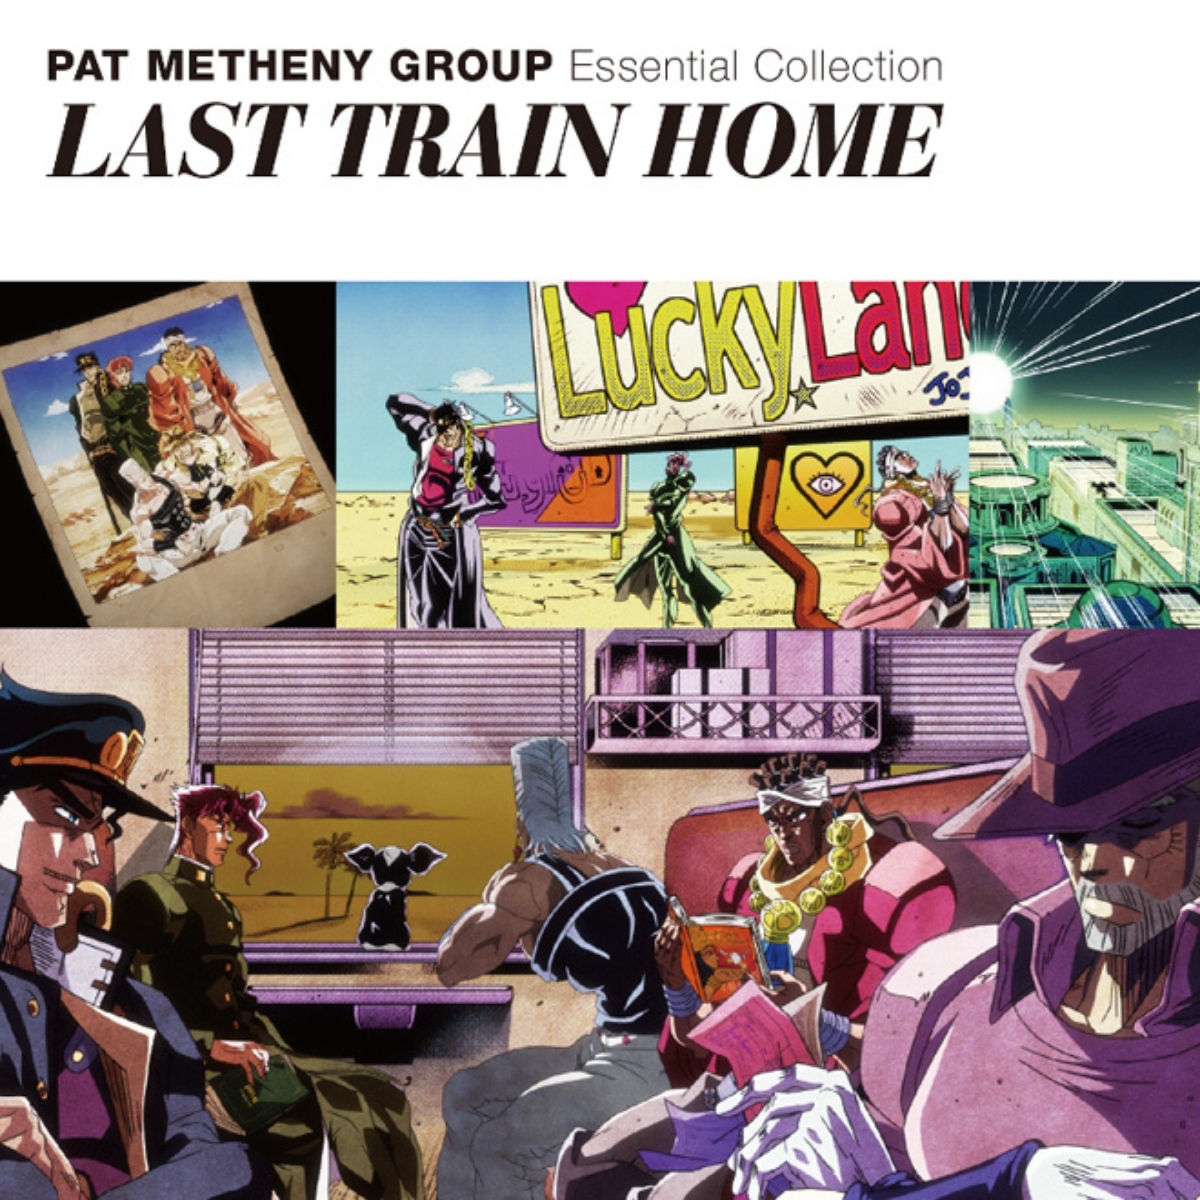 Pat Metheny Group - LAST TRAIN HOME